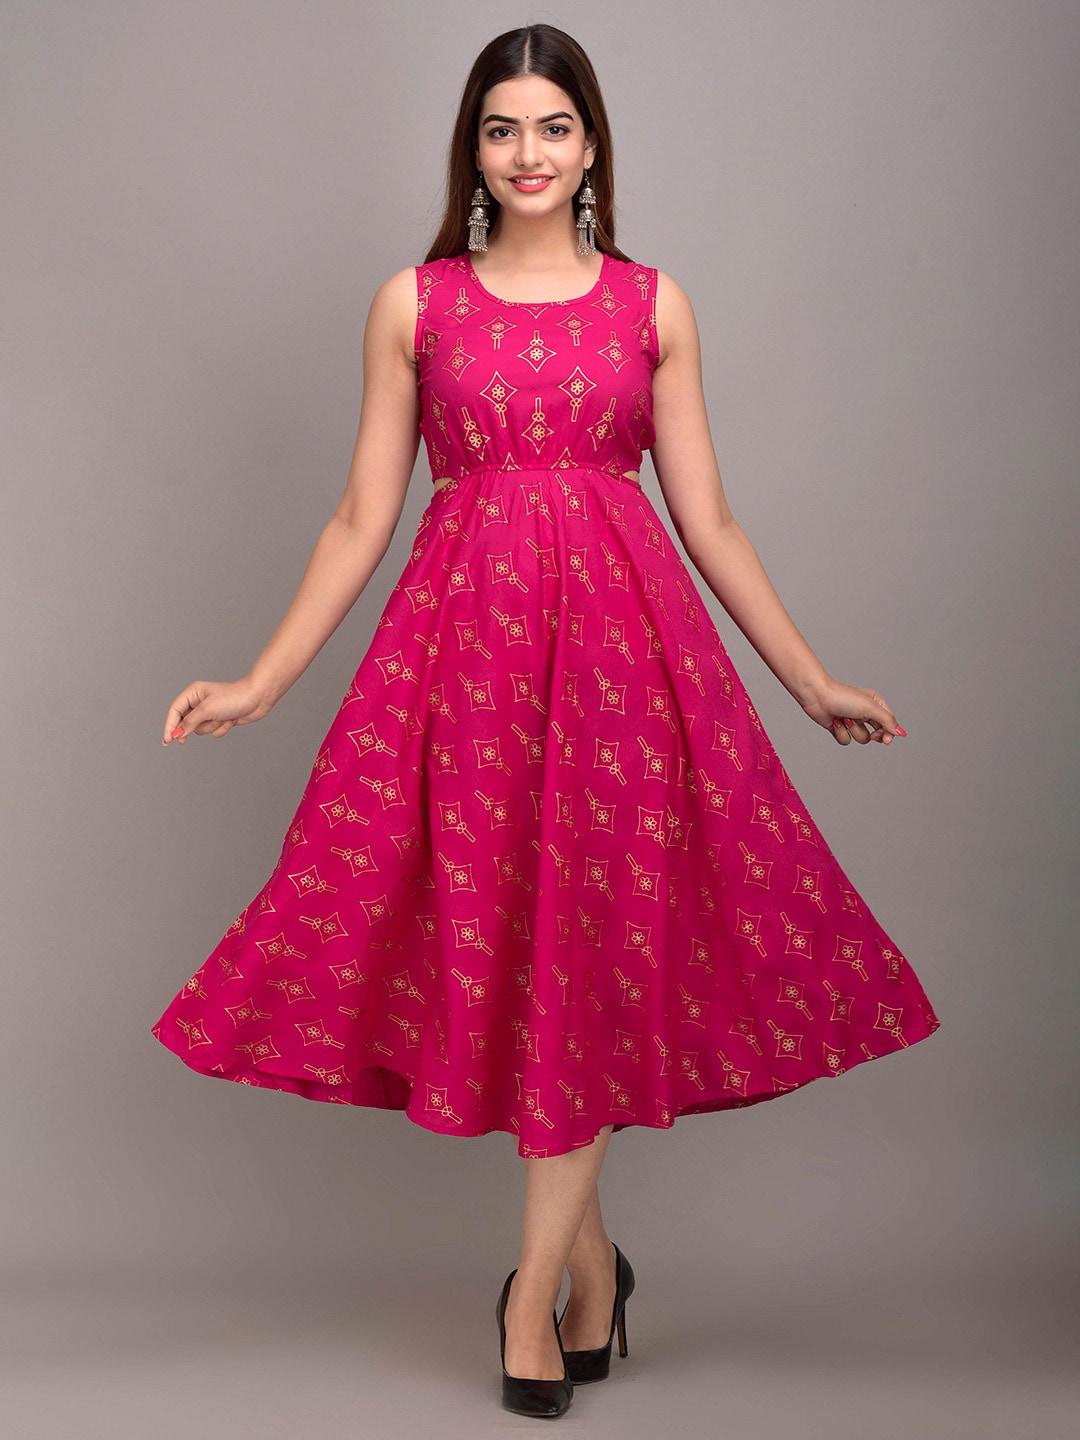 unibliss-pink-&-maroon-floral-empire-midi-dress